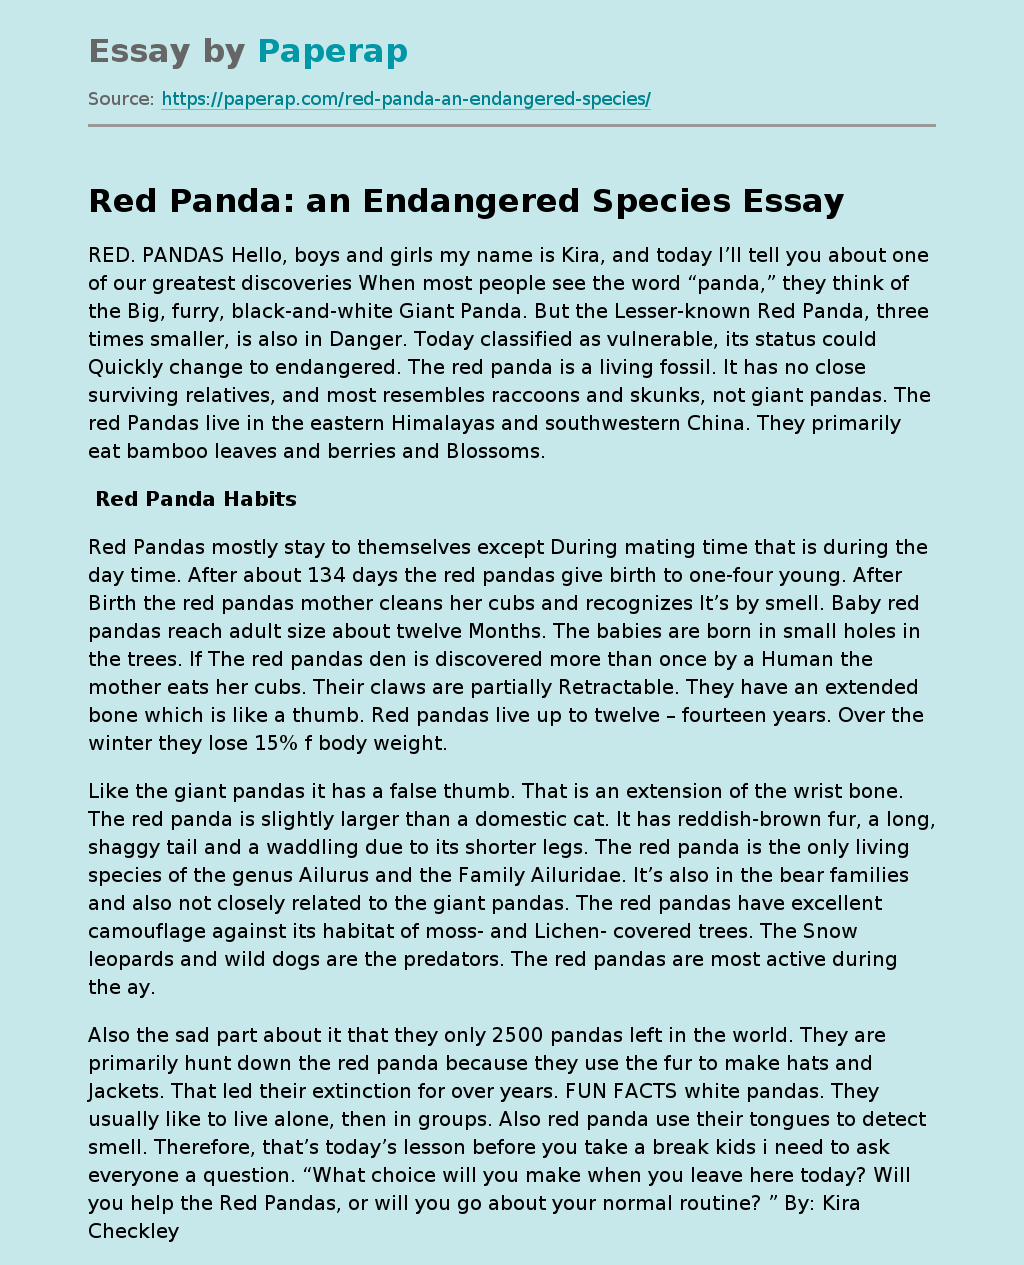 Red Panda: an Endangered Species